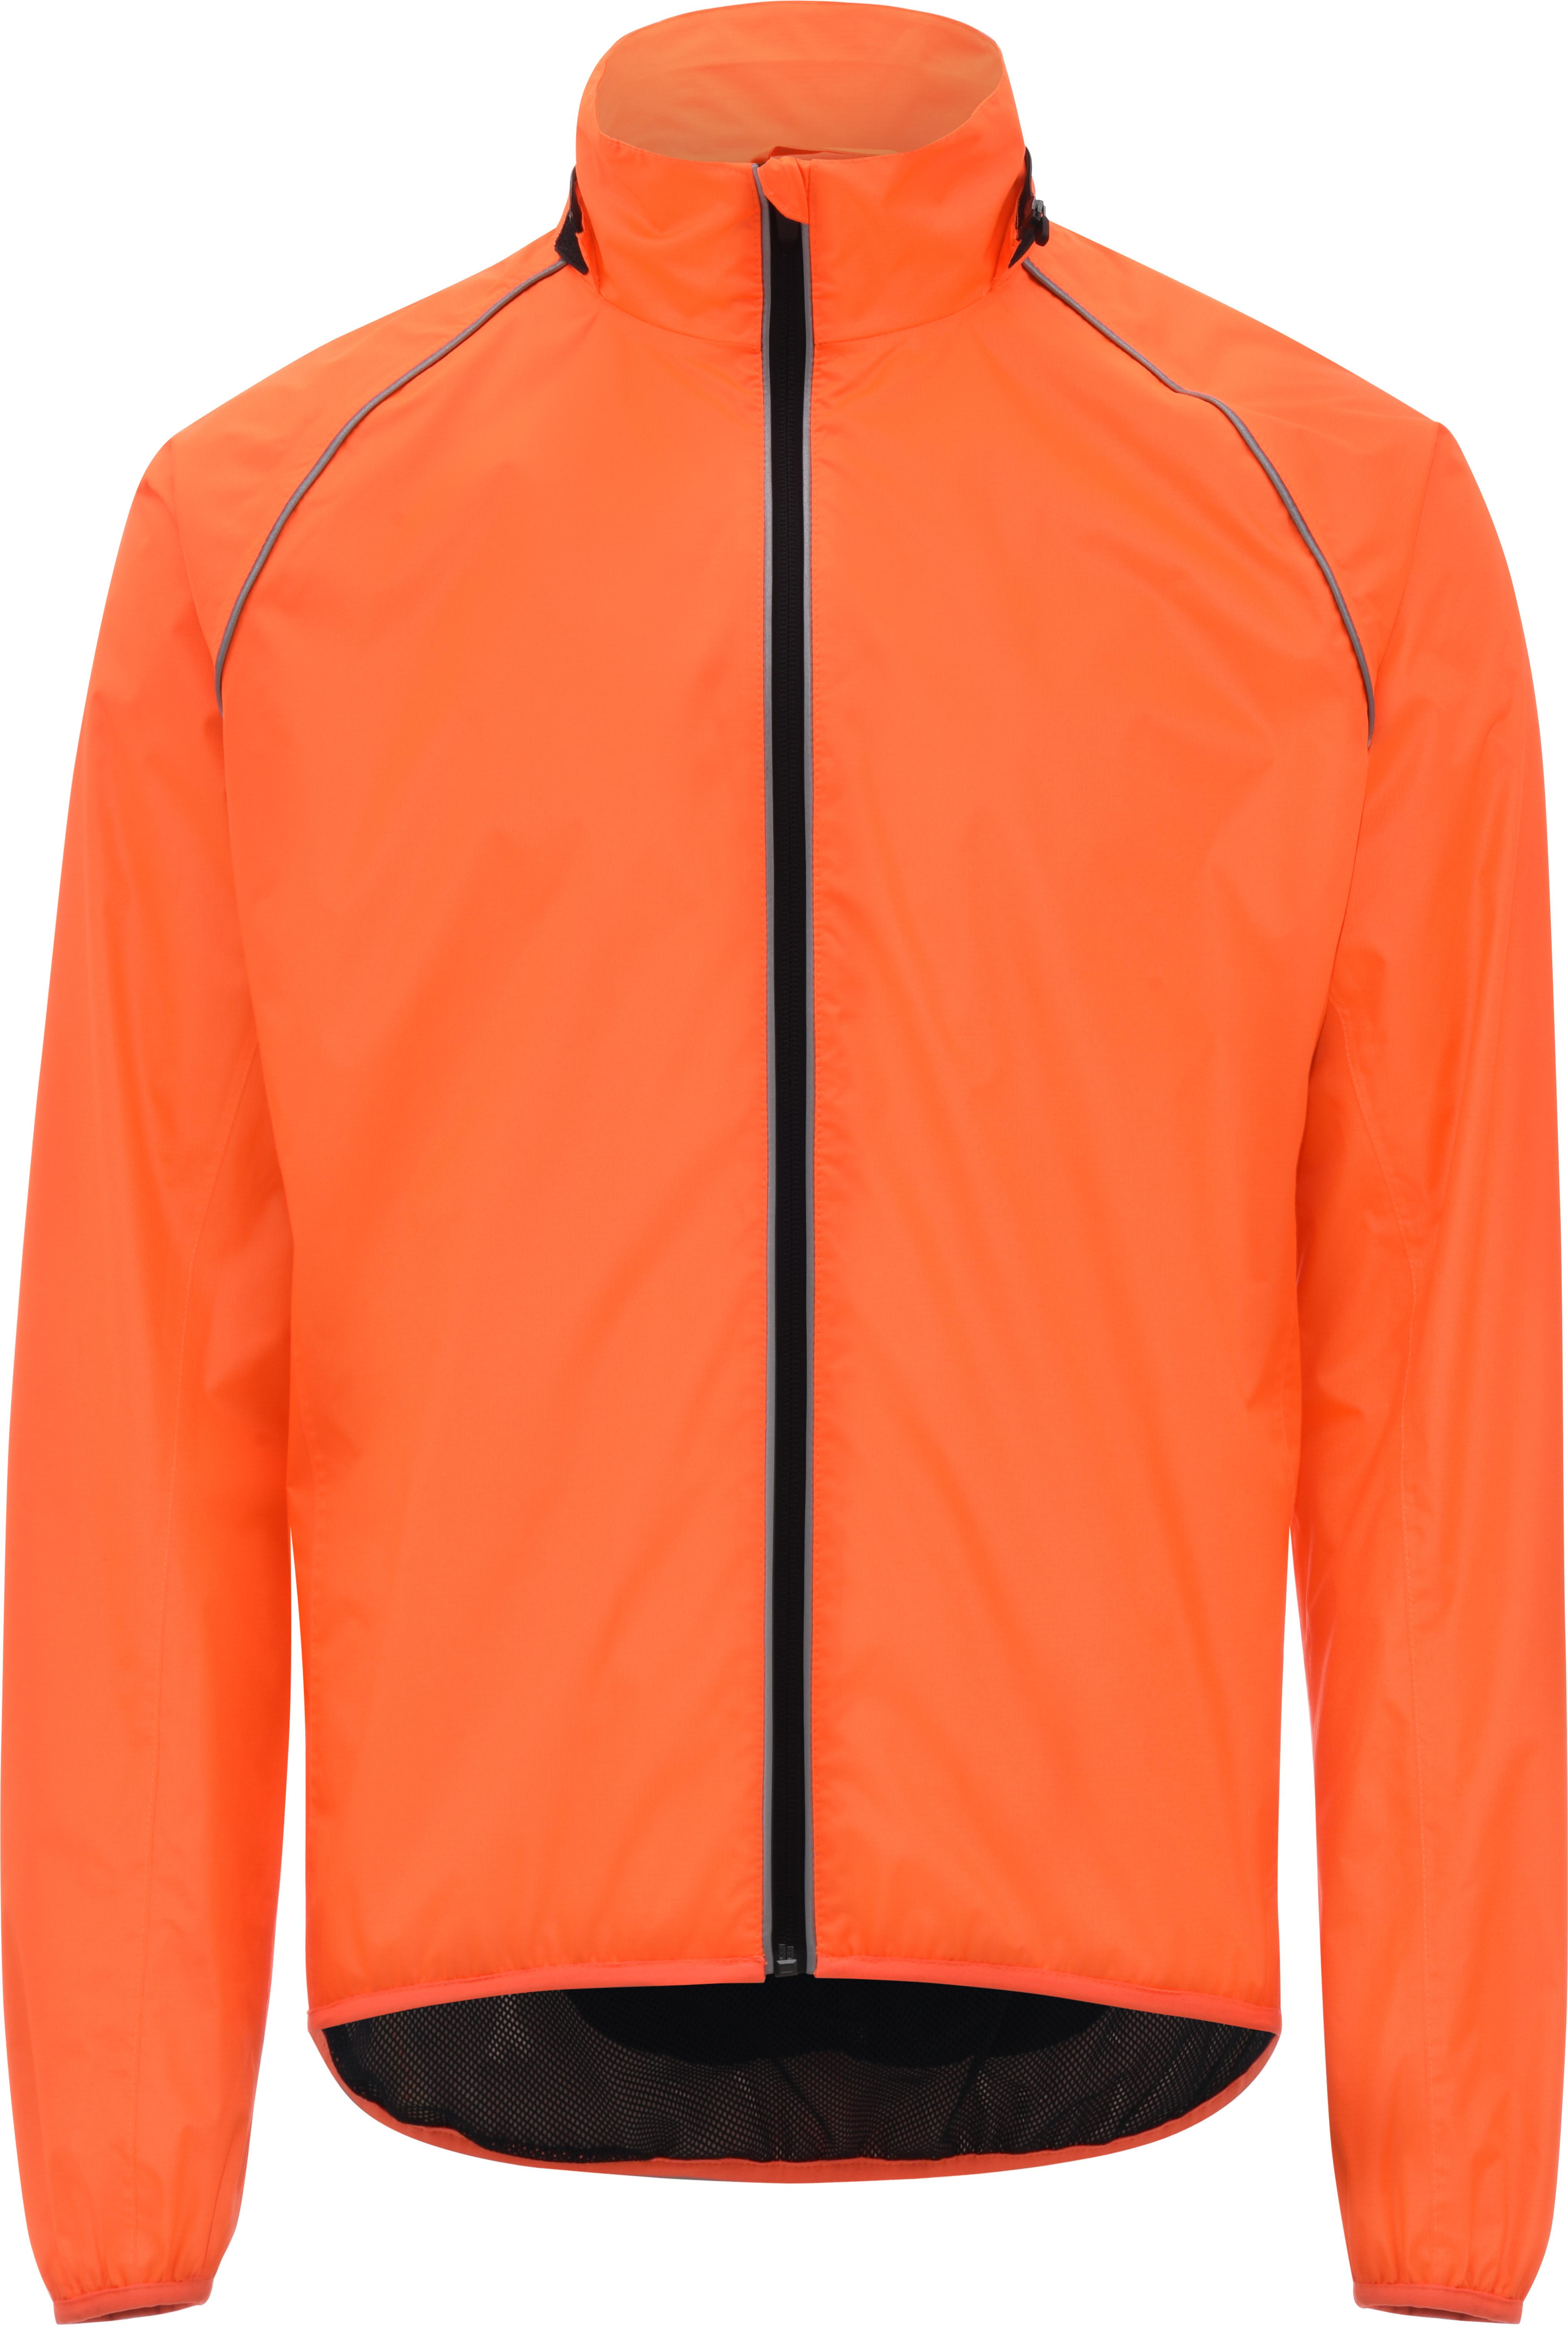 Halfords Ridge Unisex Waterproof Jacket - Fluorescent Orange, M